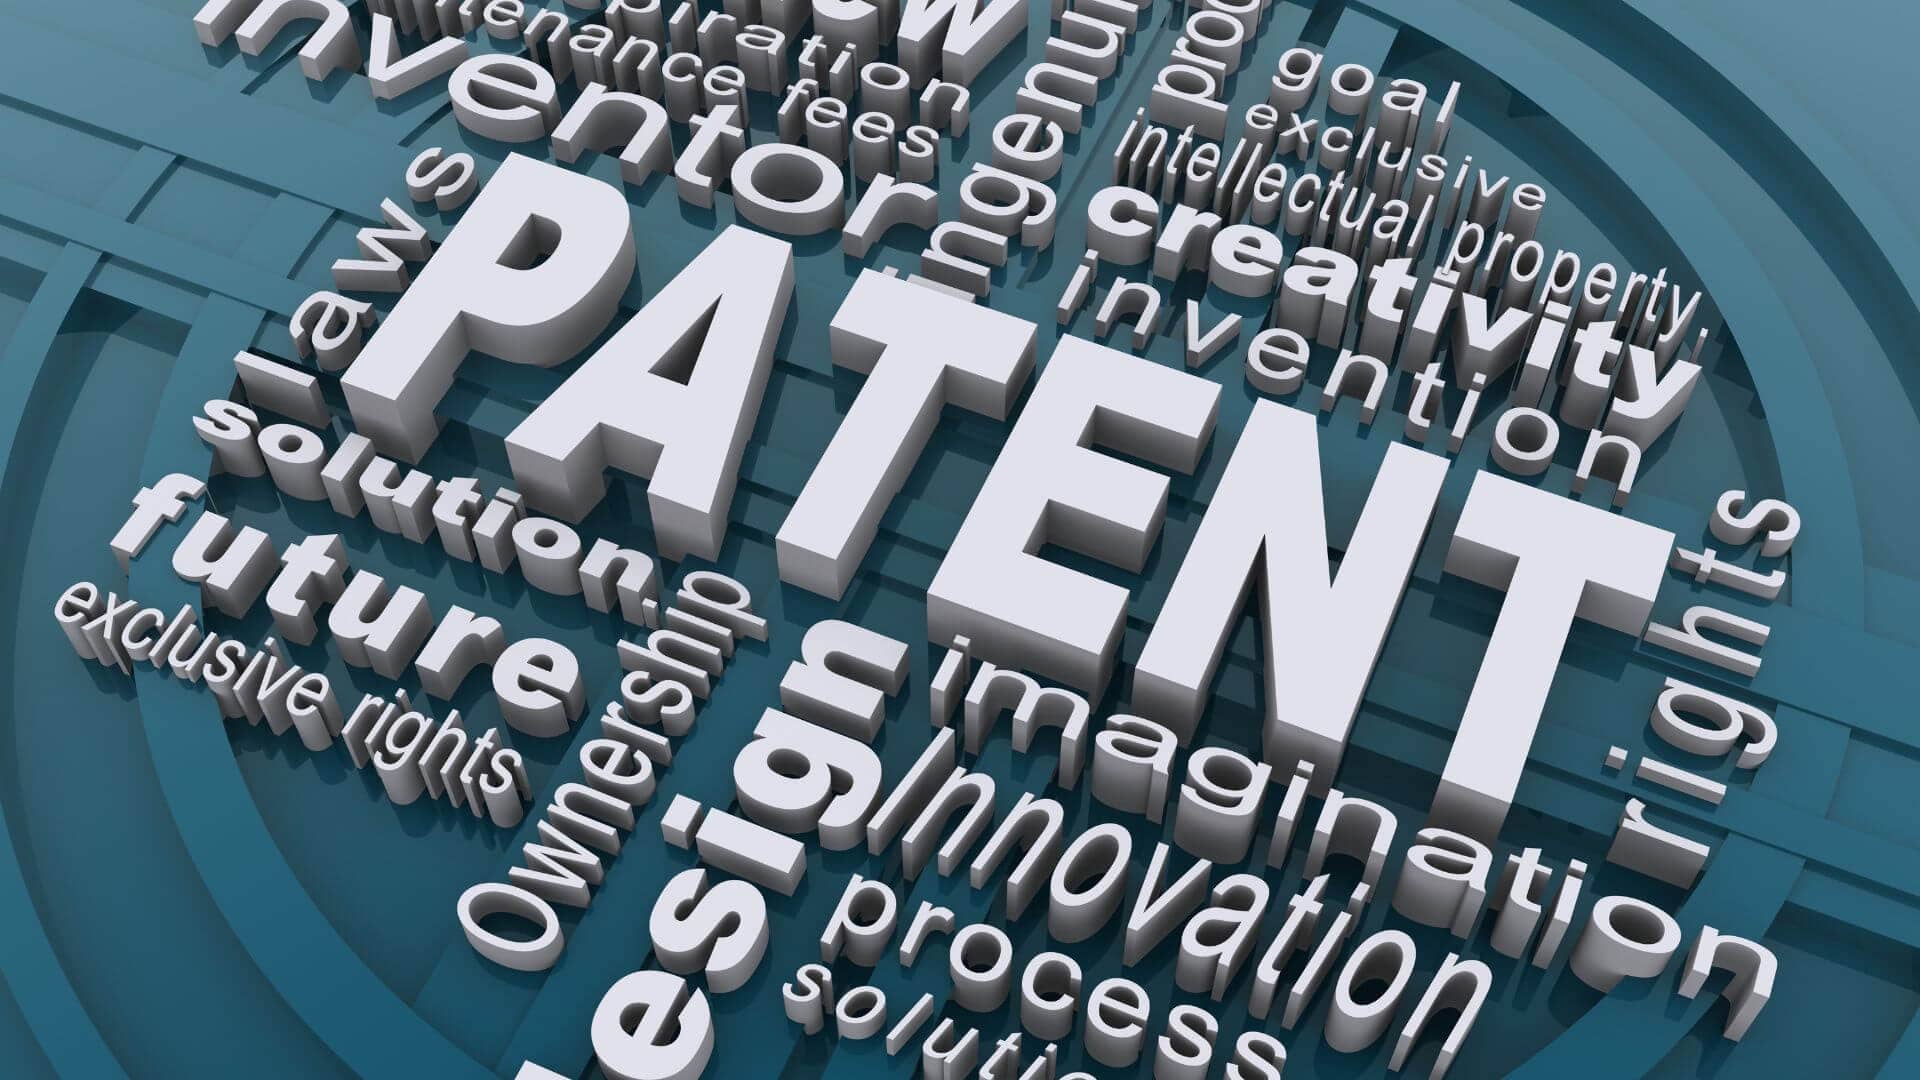 Patent Strategies